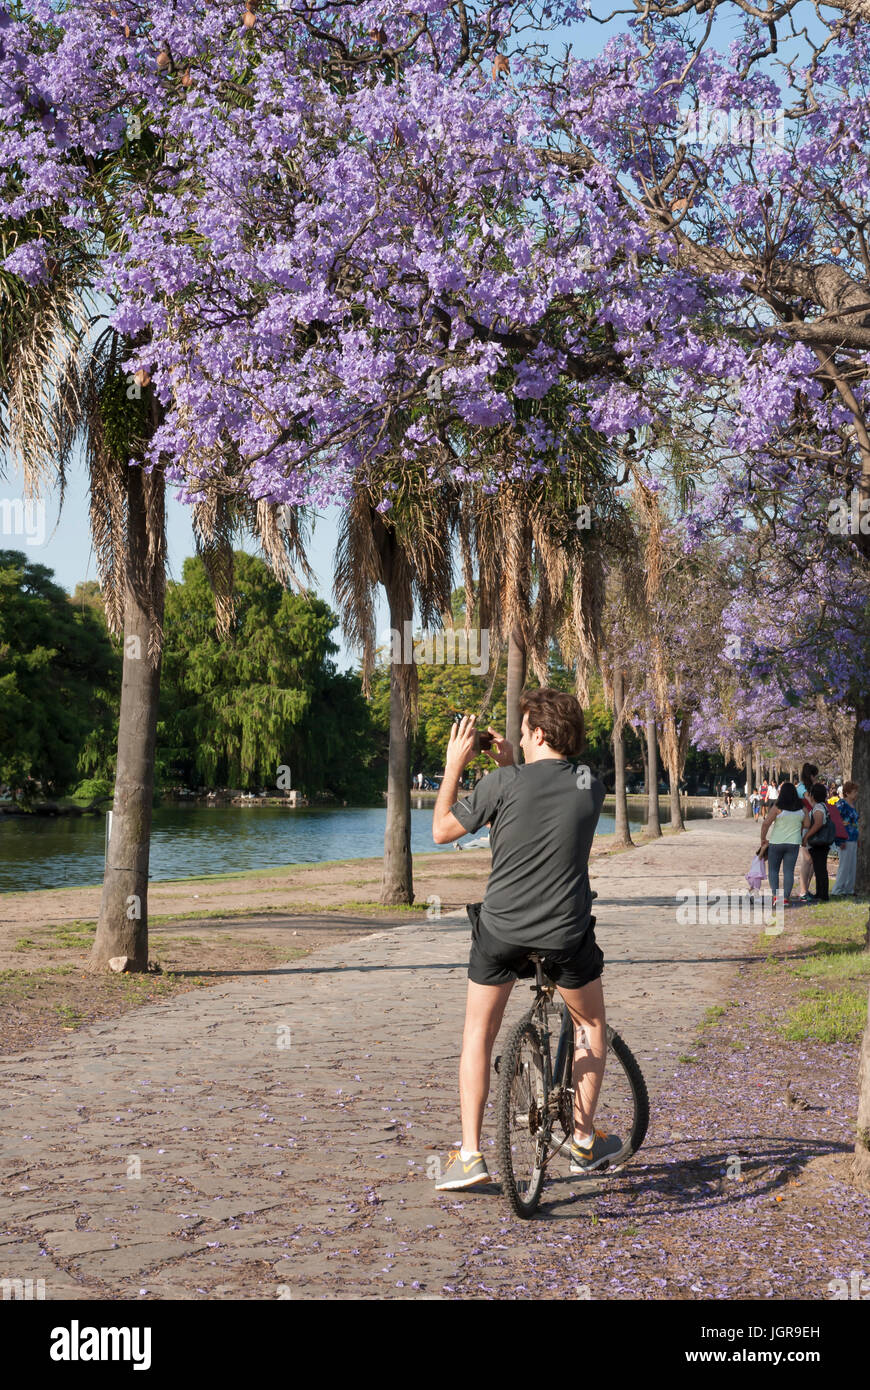 Argentina. Buenos Aires during springtime. Young man taking pictures at Parque 3 de Febrero under Jacaranda trees (jacaranda mimosifolia). Stock Photo